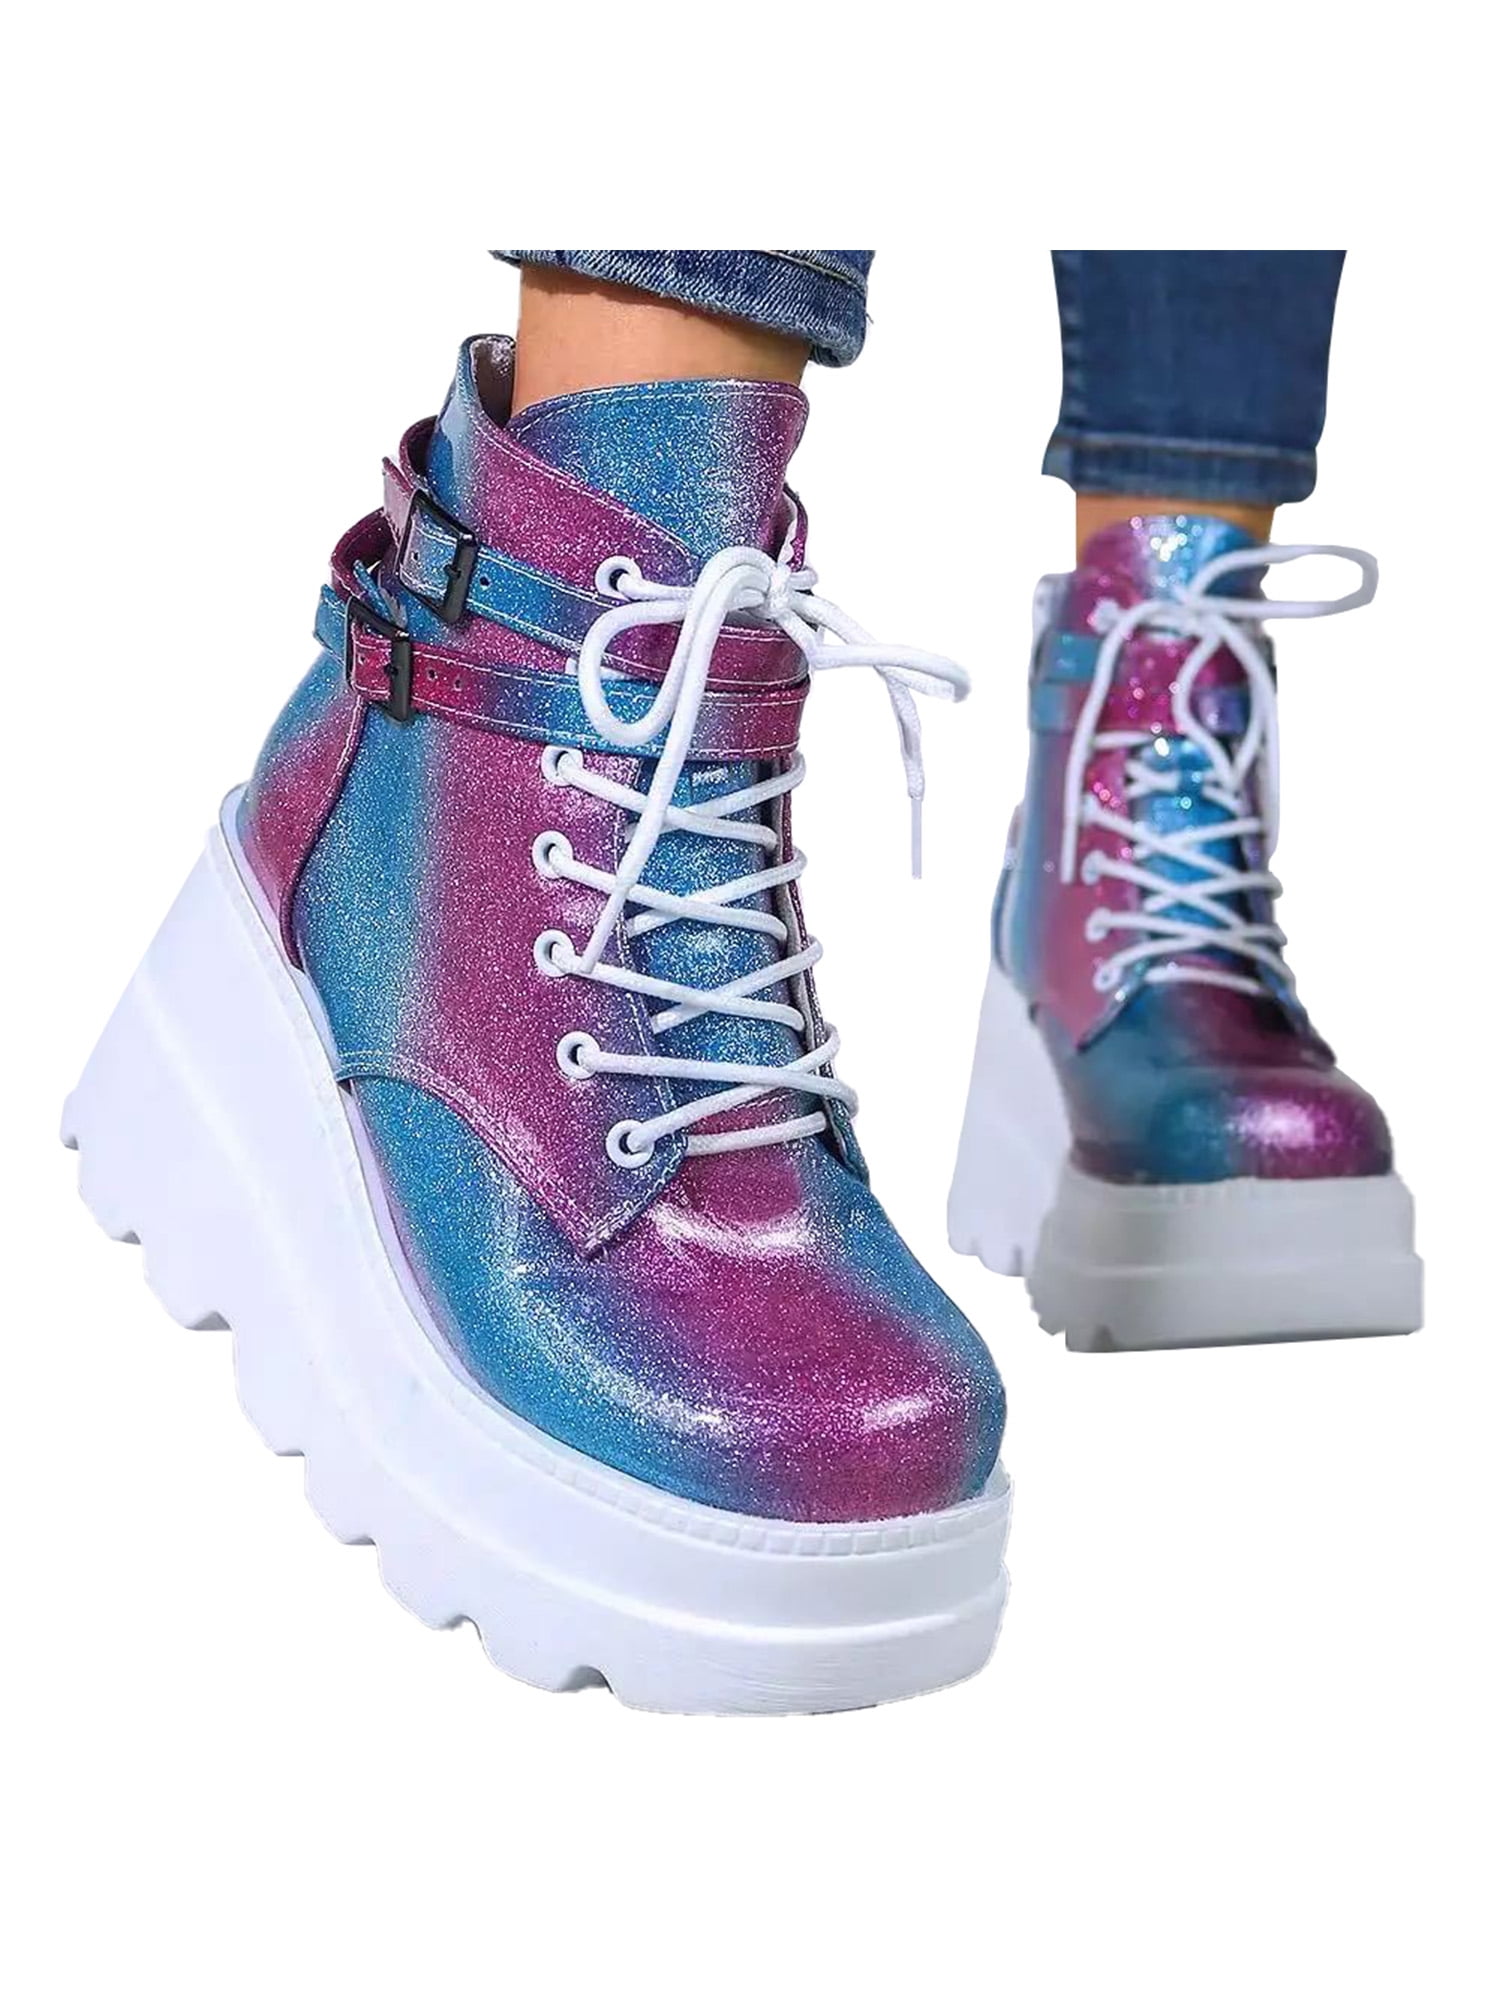 Fashion Women's Platform Wedge Heels Punk Lace up Ankle Boots Punk Shoes size 